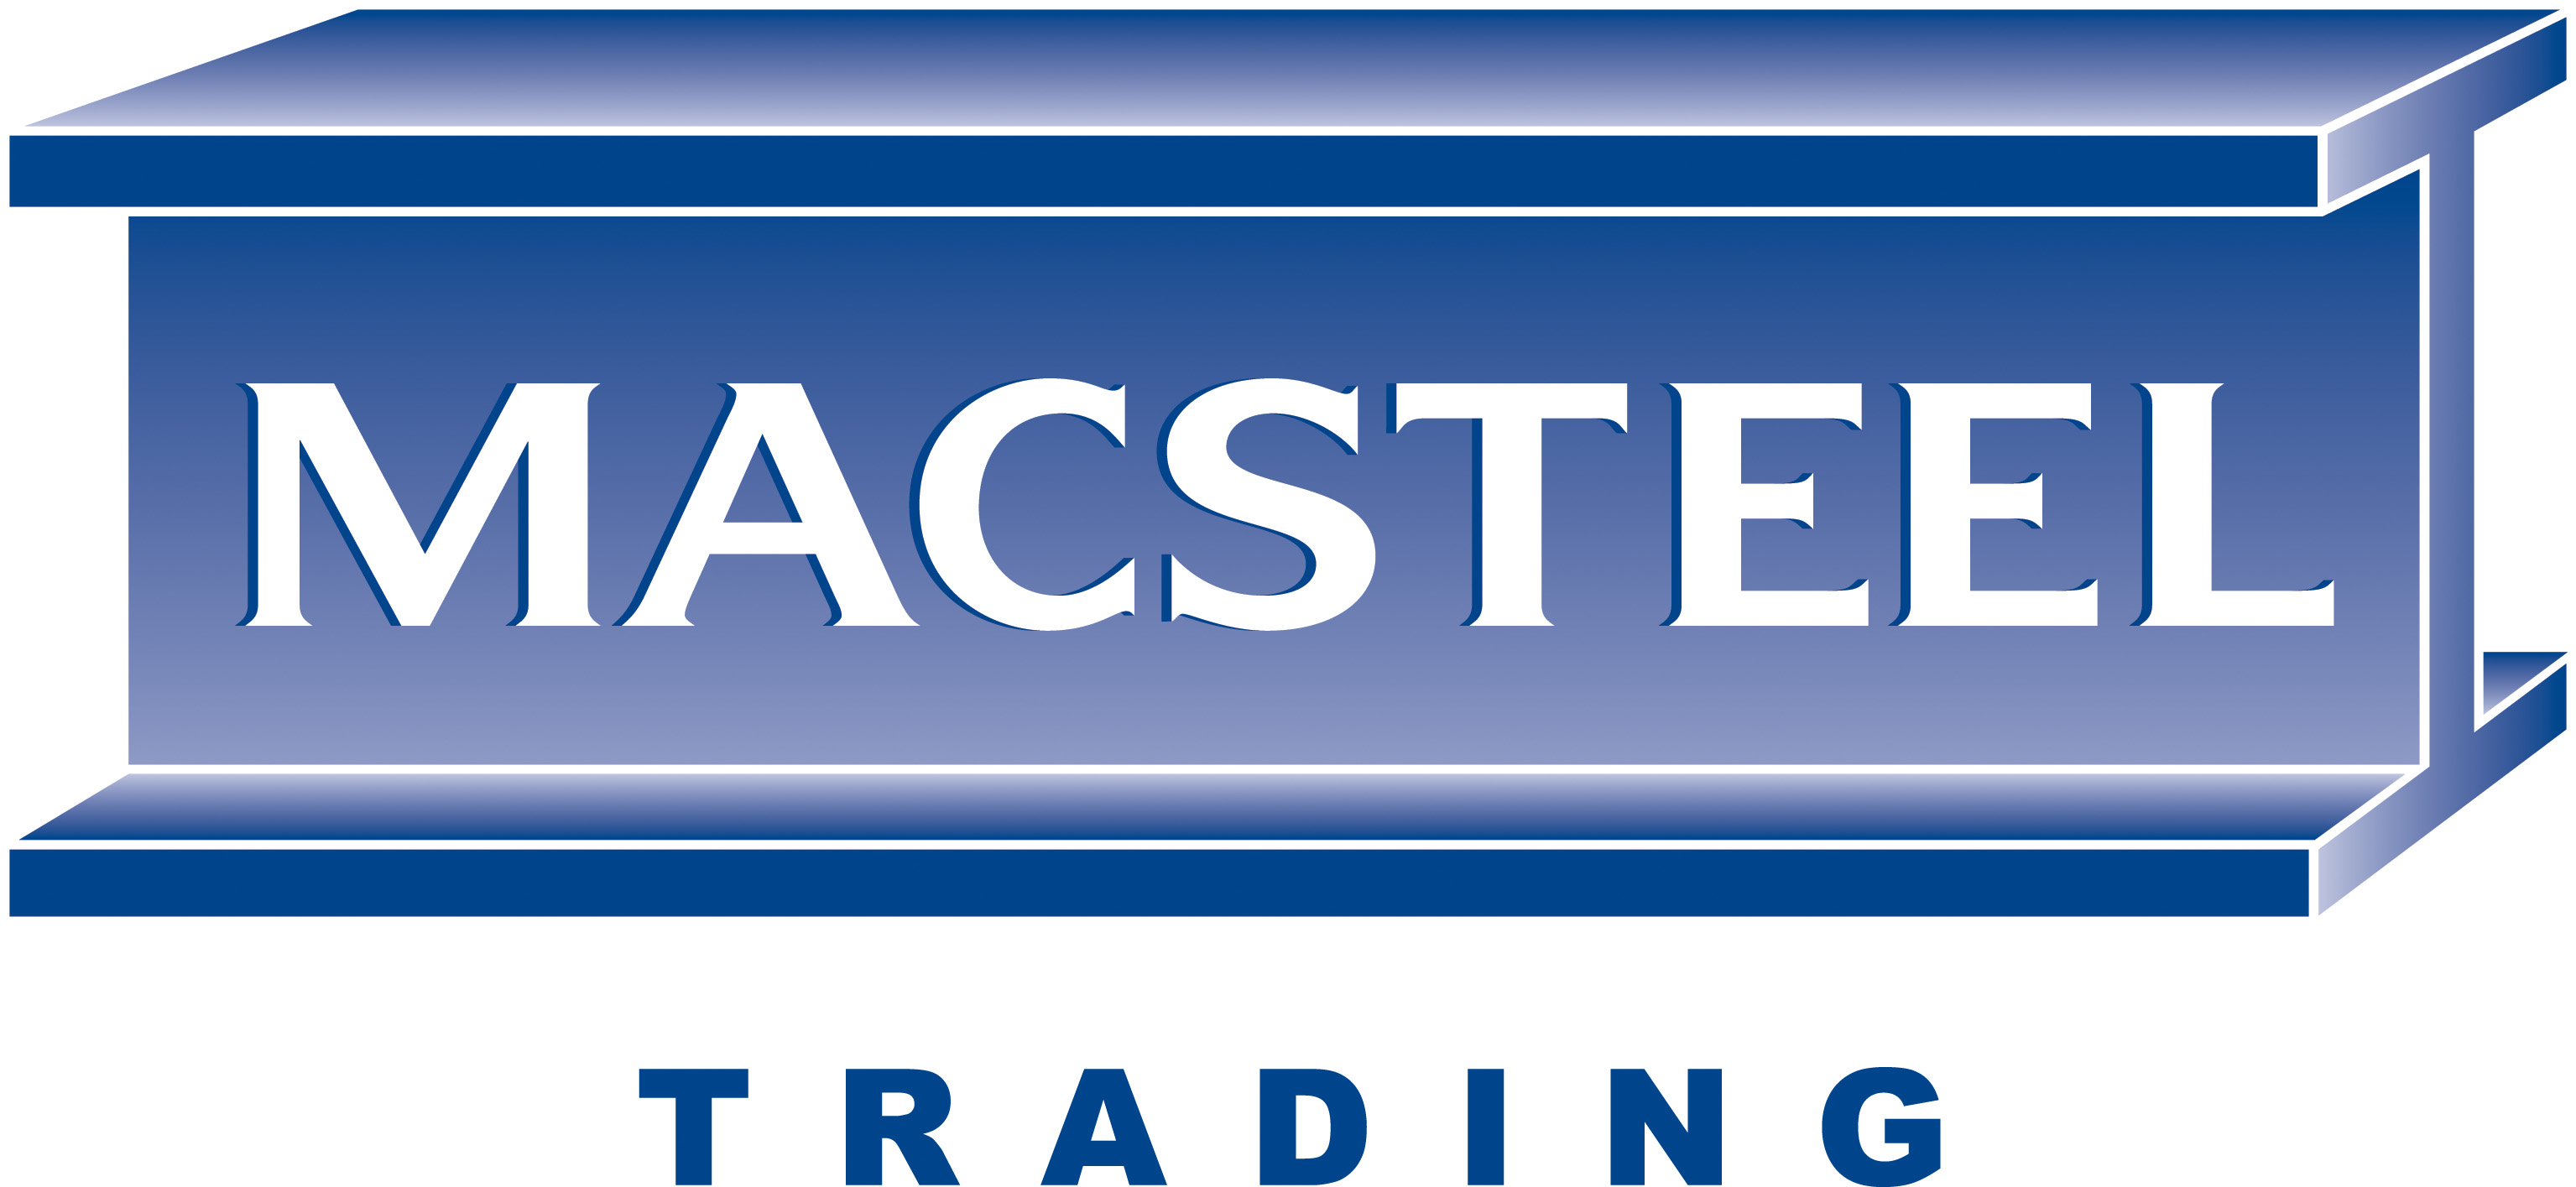 Macsteel Trading - Bloemfontein logo